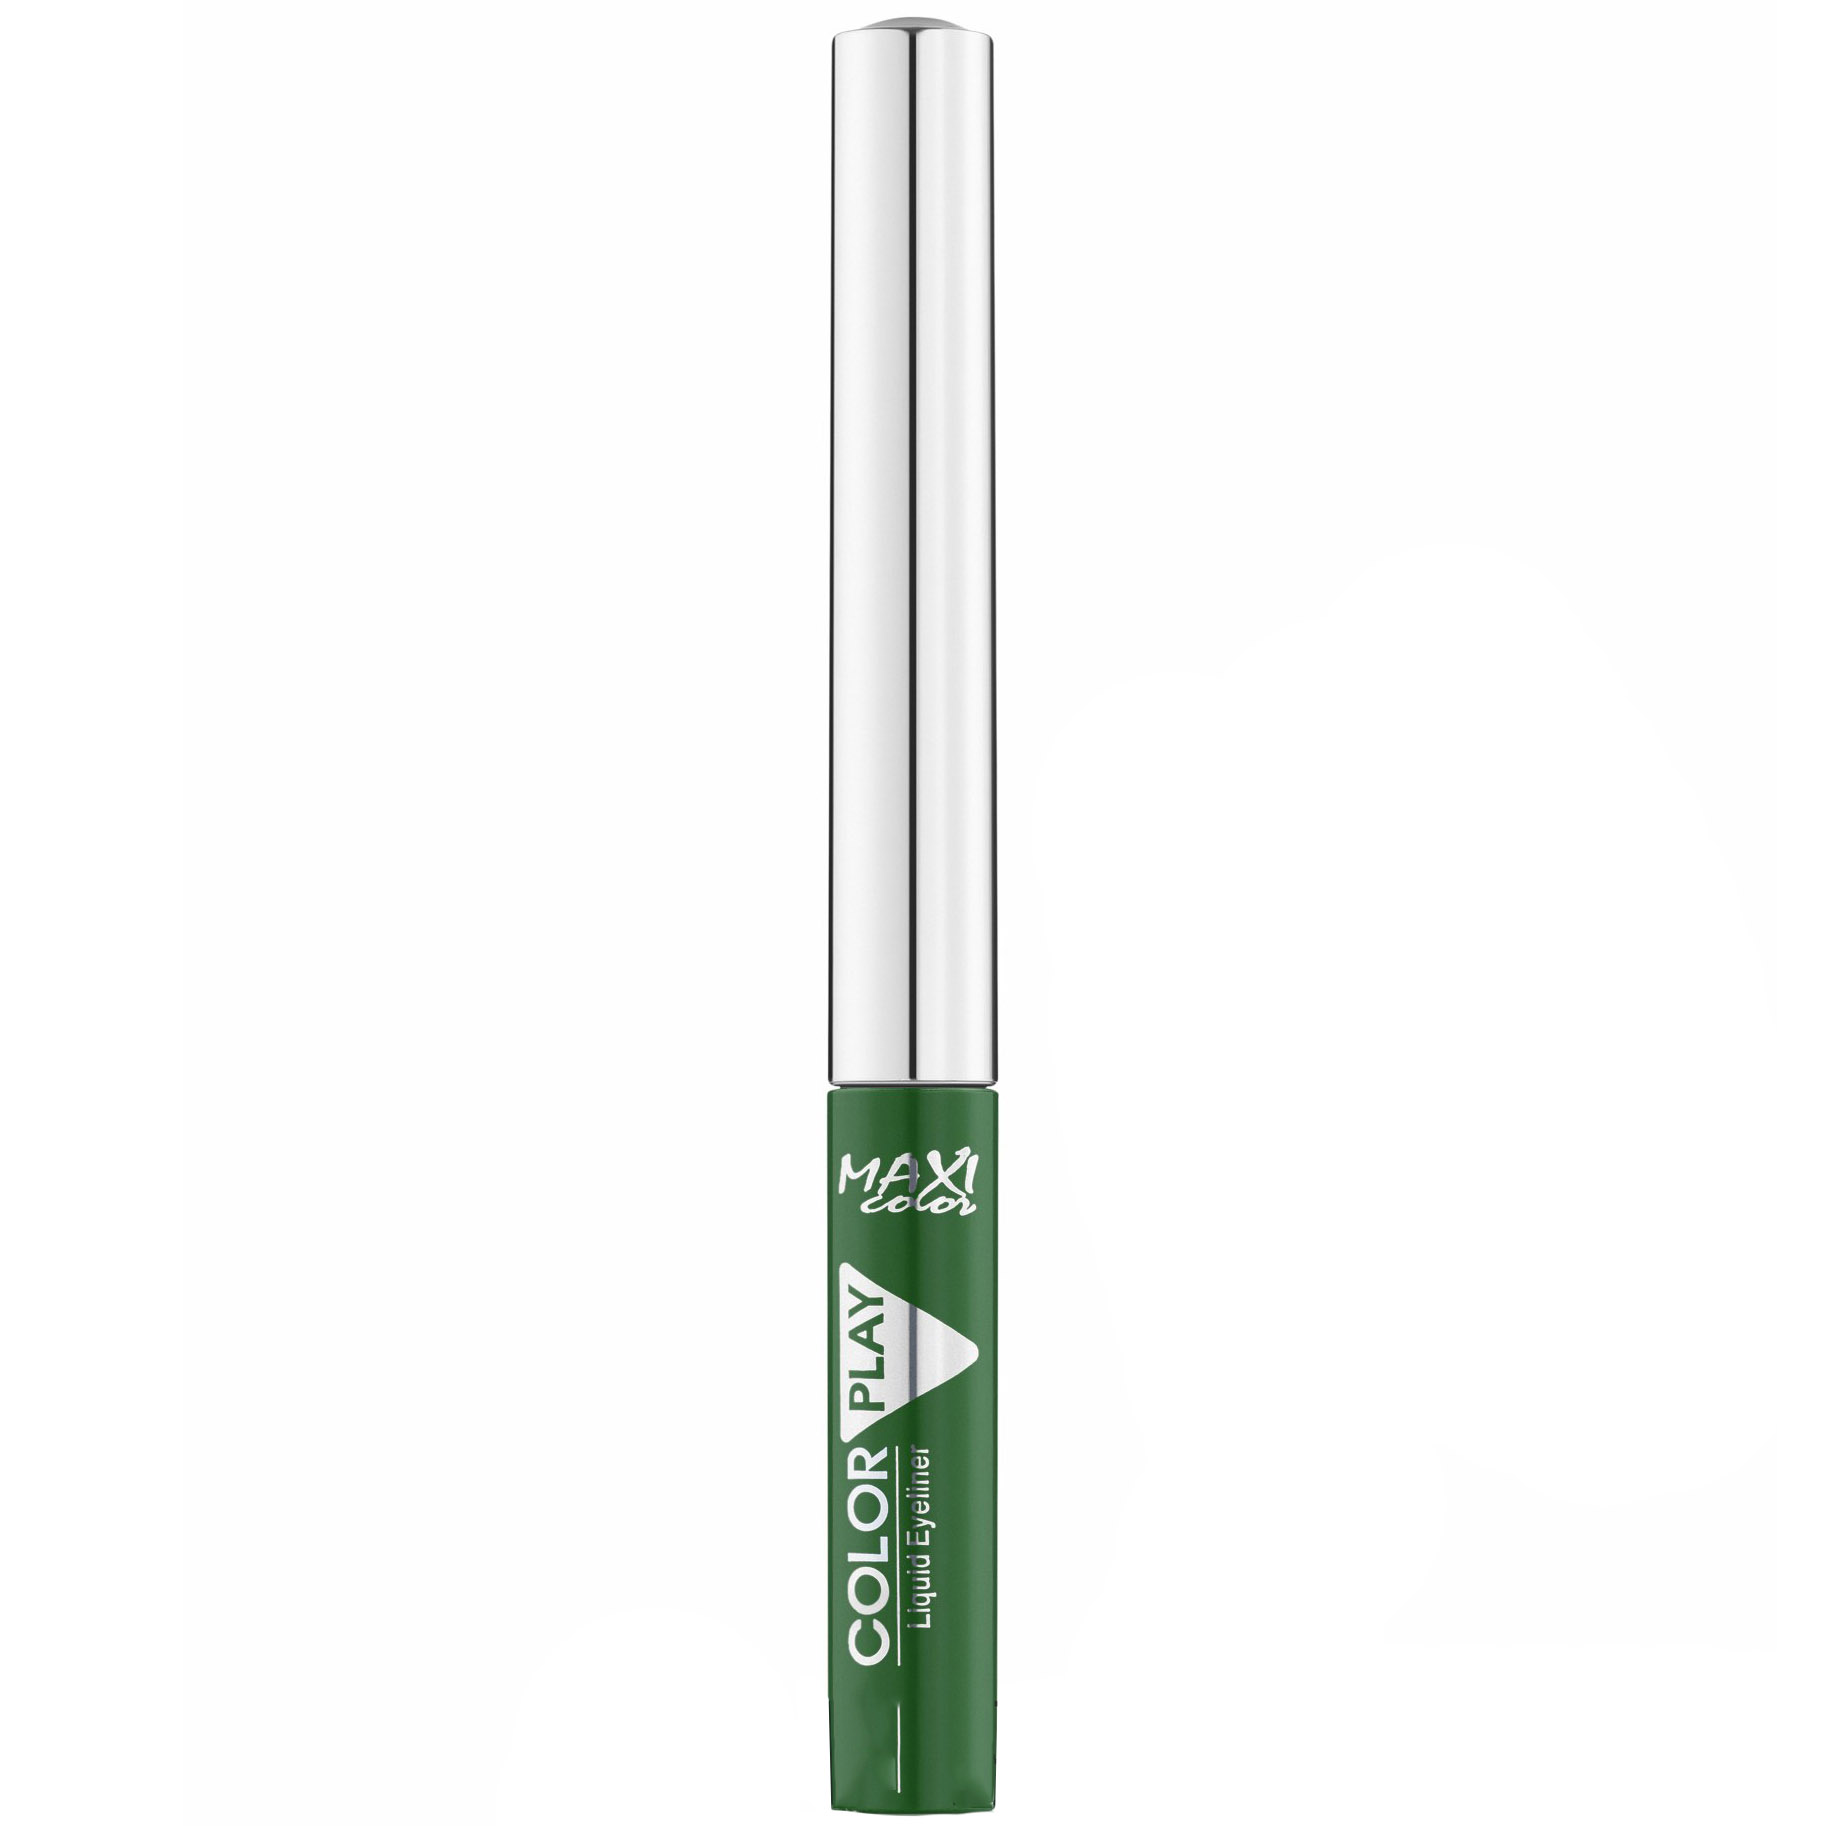 Підводка для очей Maxi Color Color Play Liquid Eyeliner рідка 01 зелена 3.5 мл - фото 1